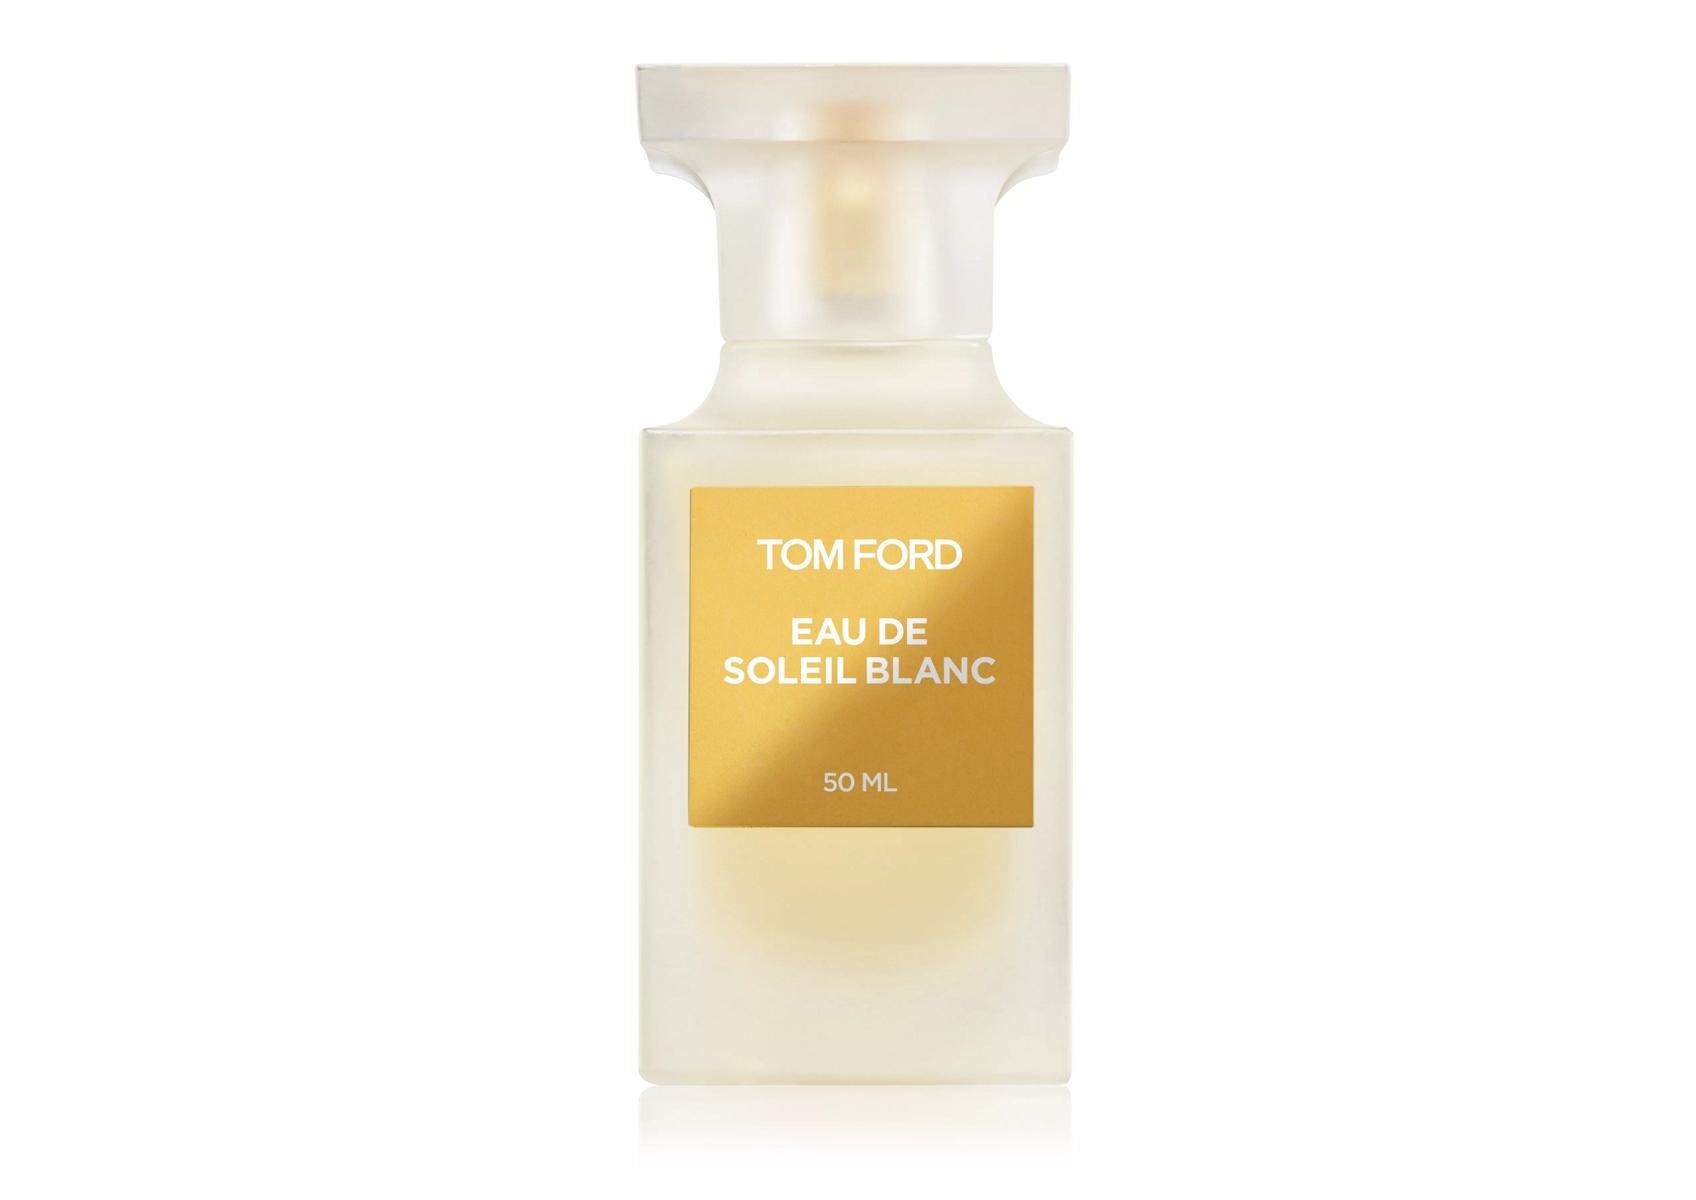 Luxus Parfum Tom Ford Eau de Soleil Blanc bestellen